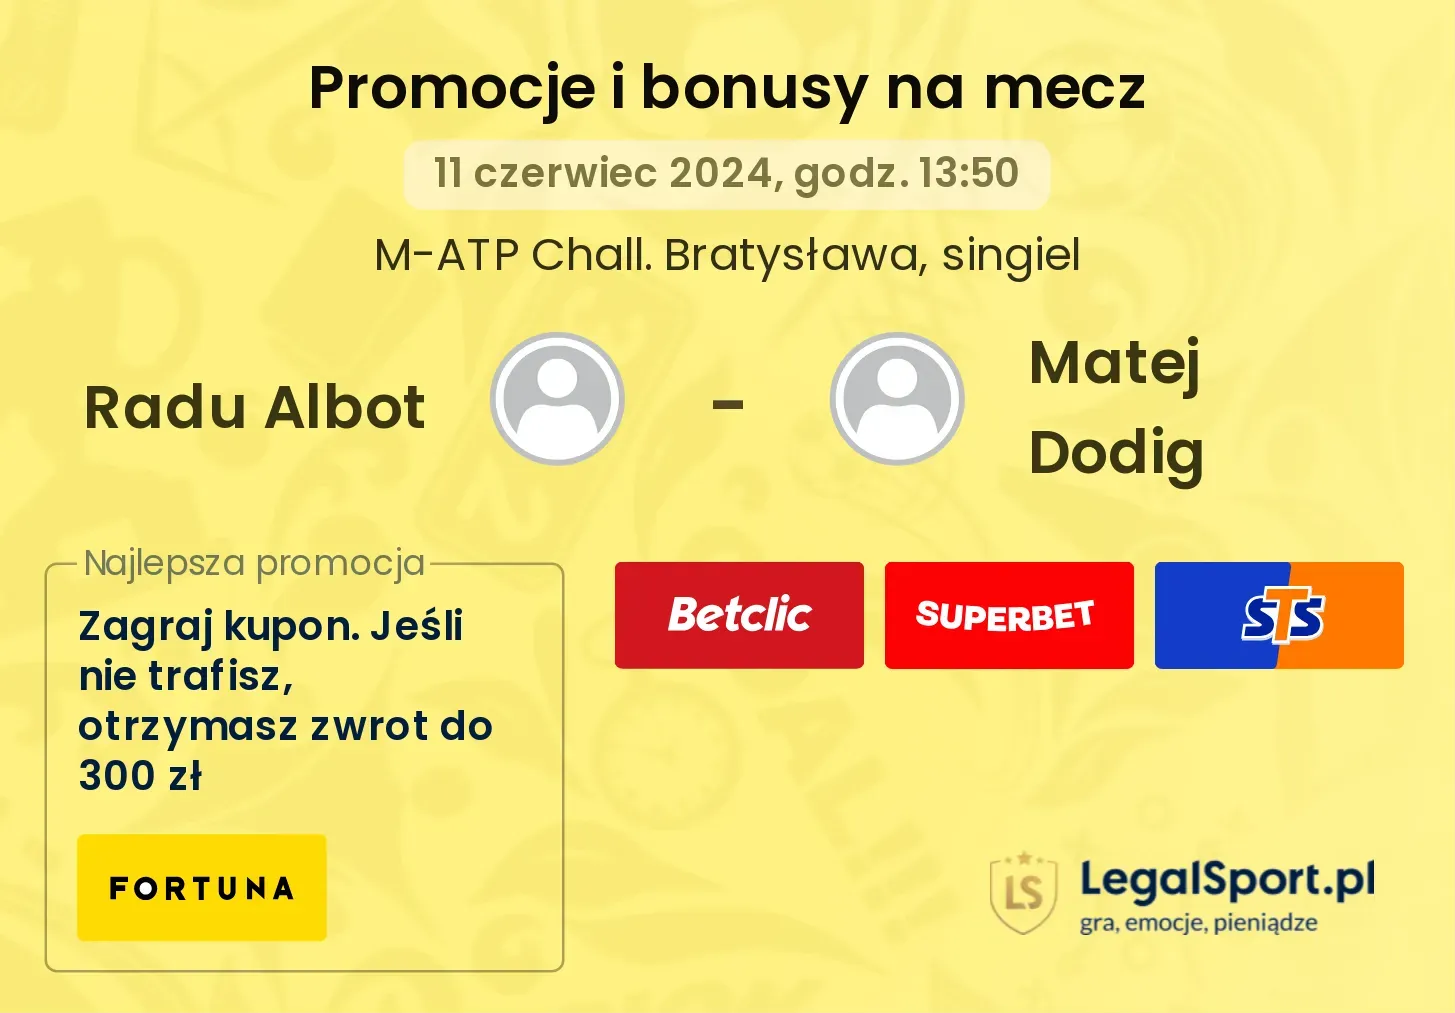 Radu Albot - Matej Dodig promocje bonusy na mecz